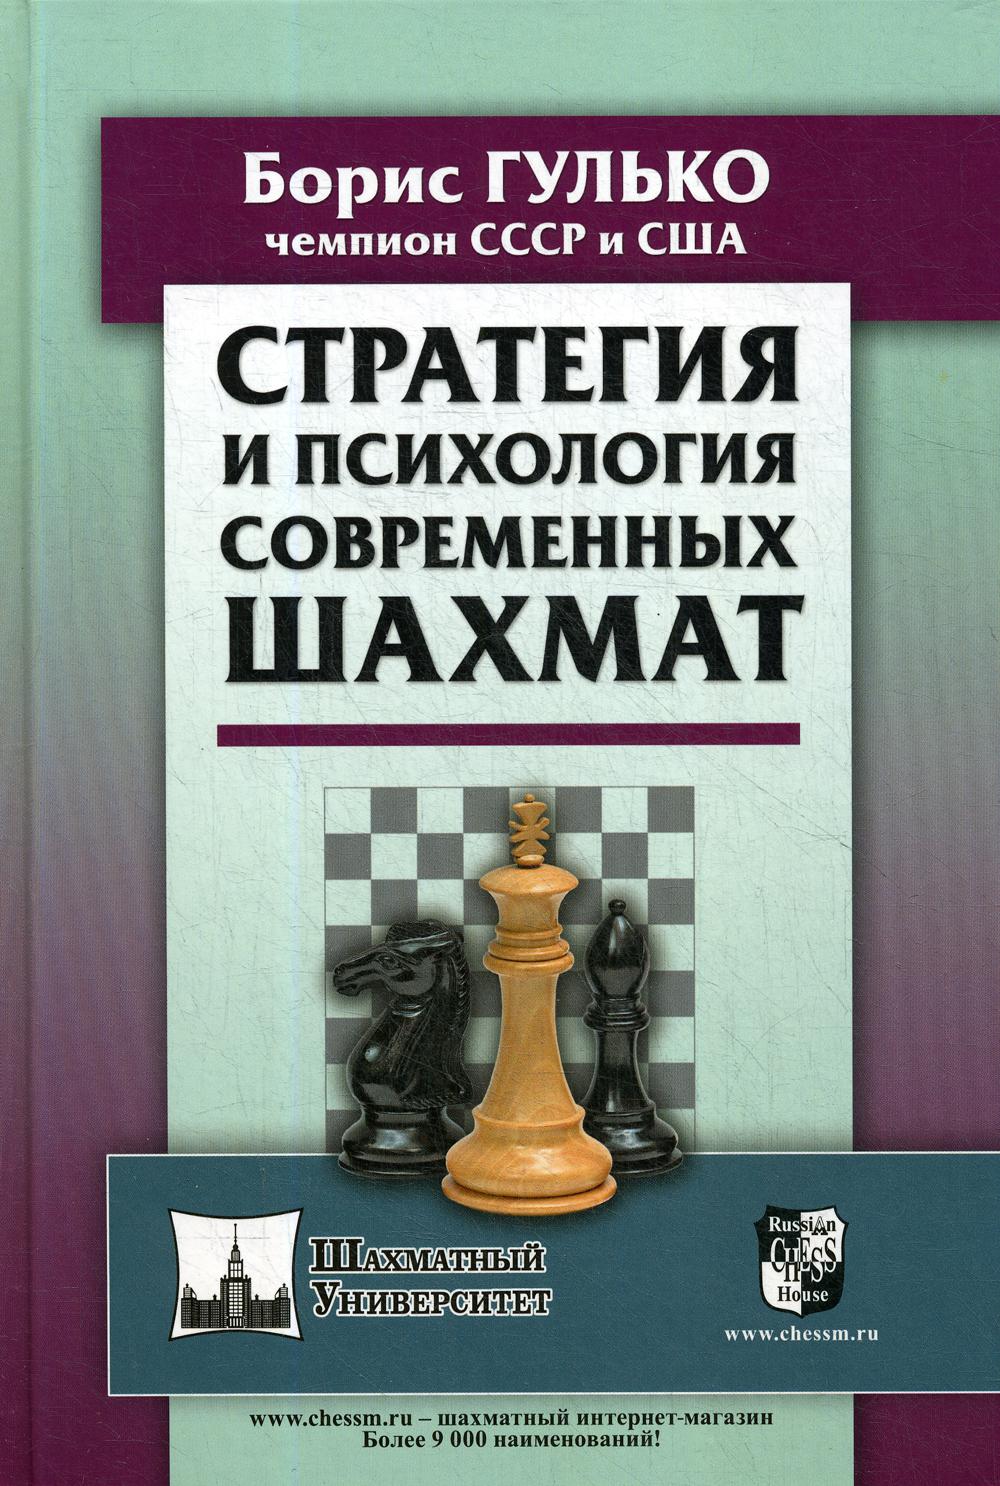 фото Книга стратегия и психология современных шахмат russian chess house